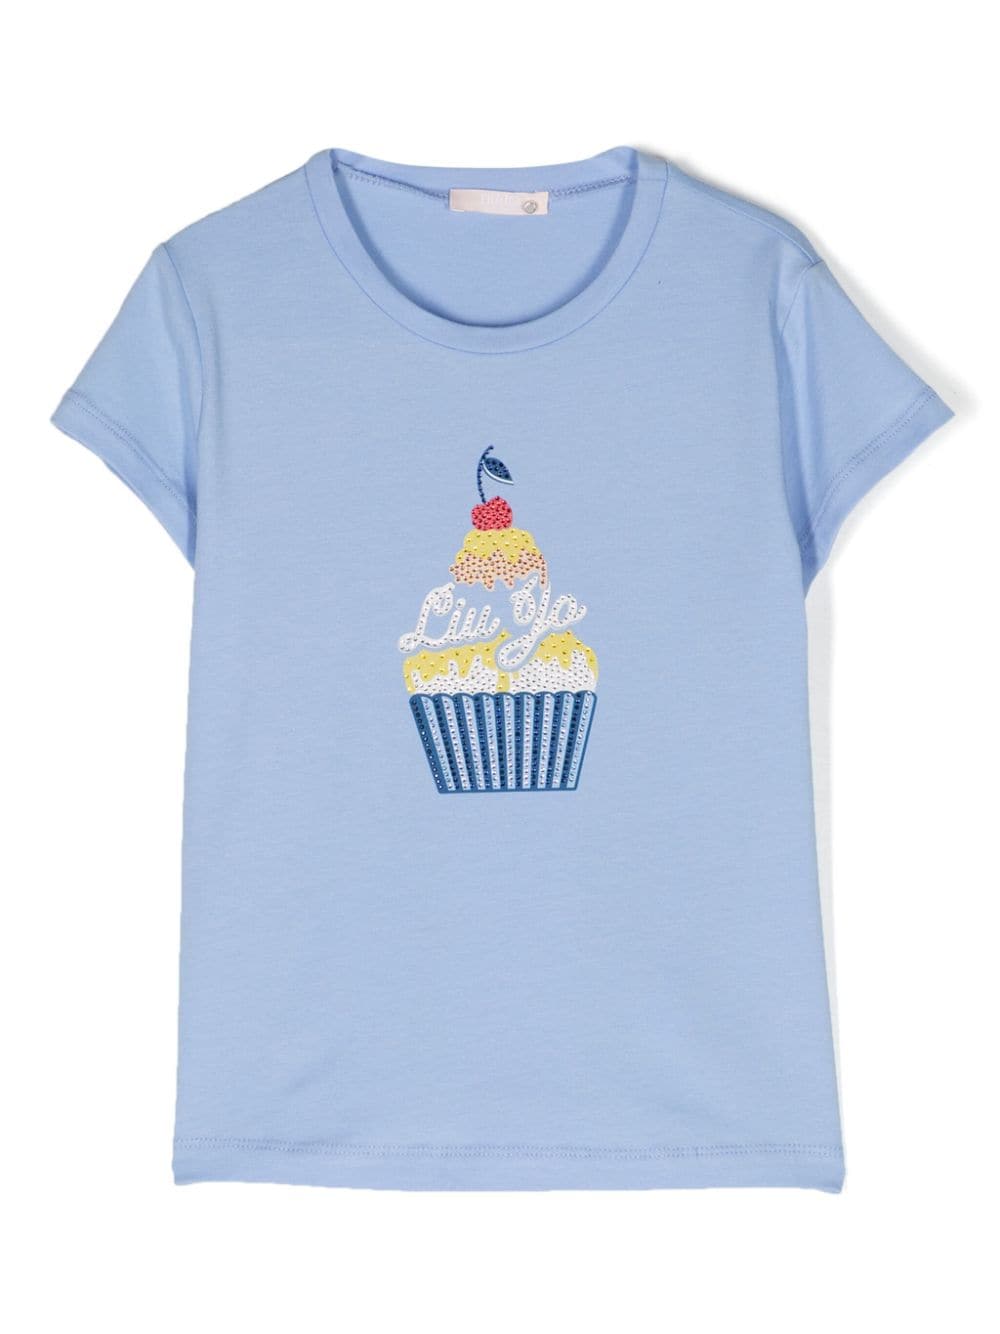 T-shirt blu per bambina con stampa